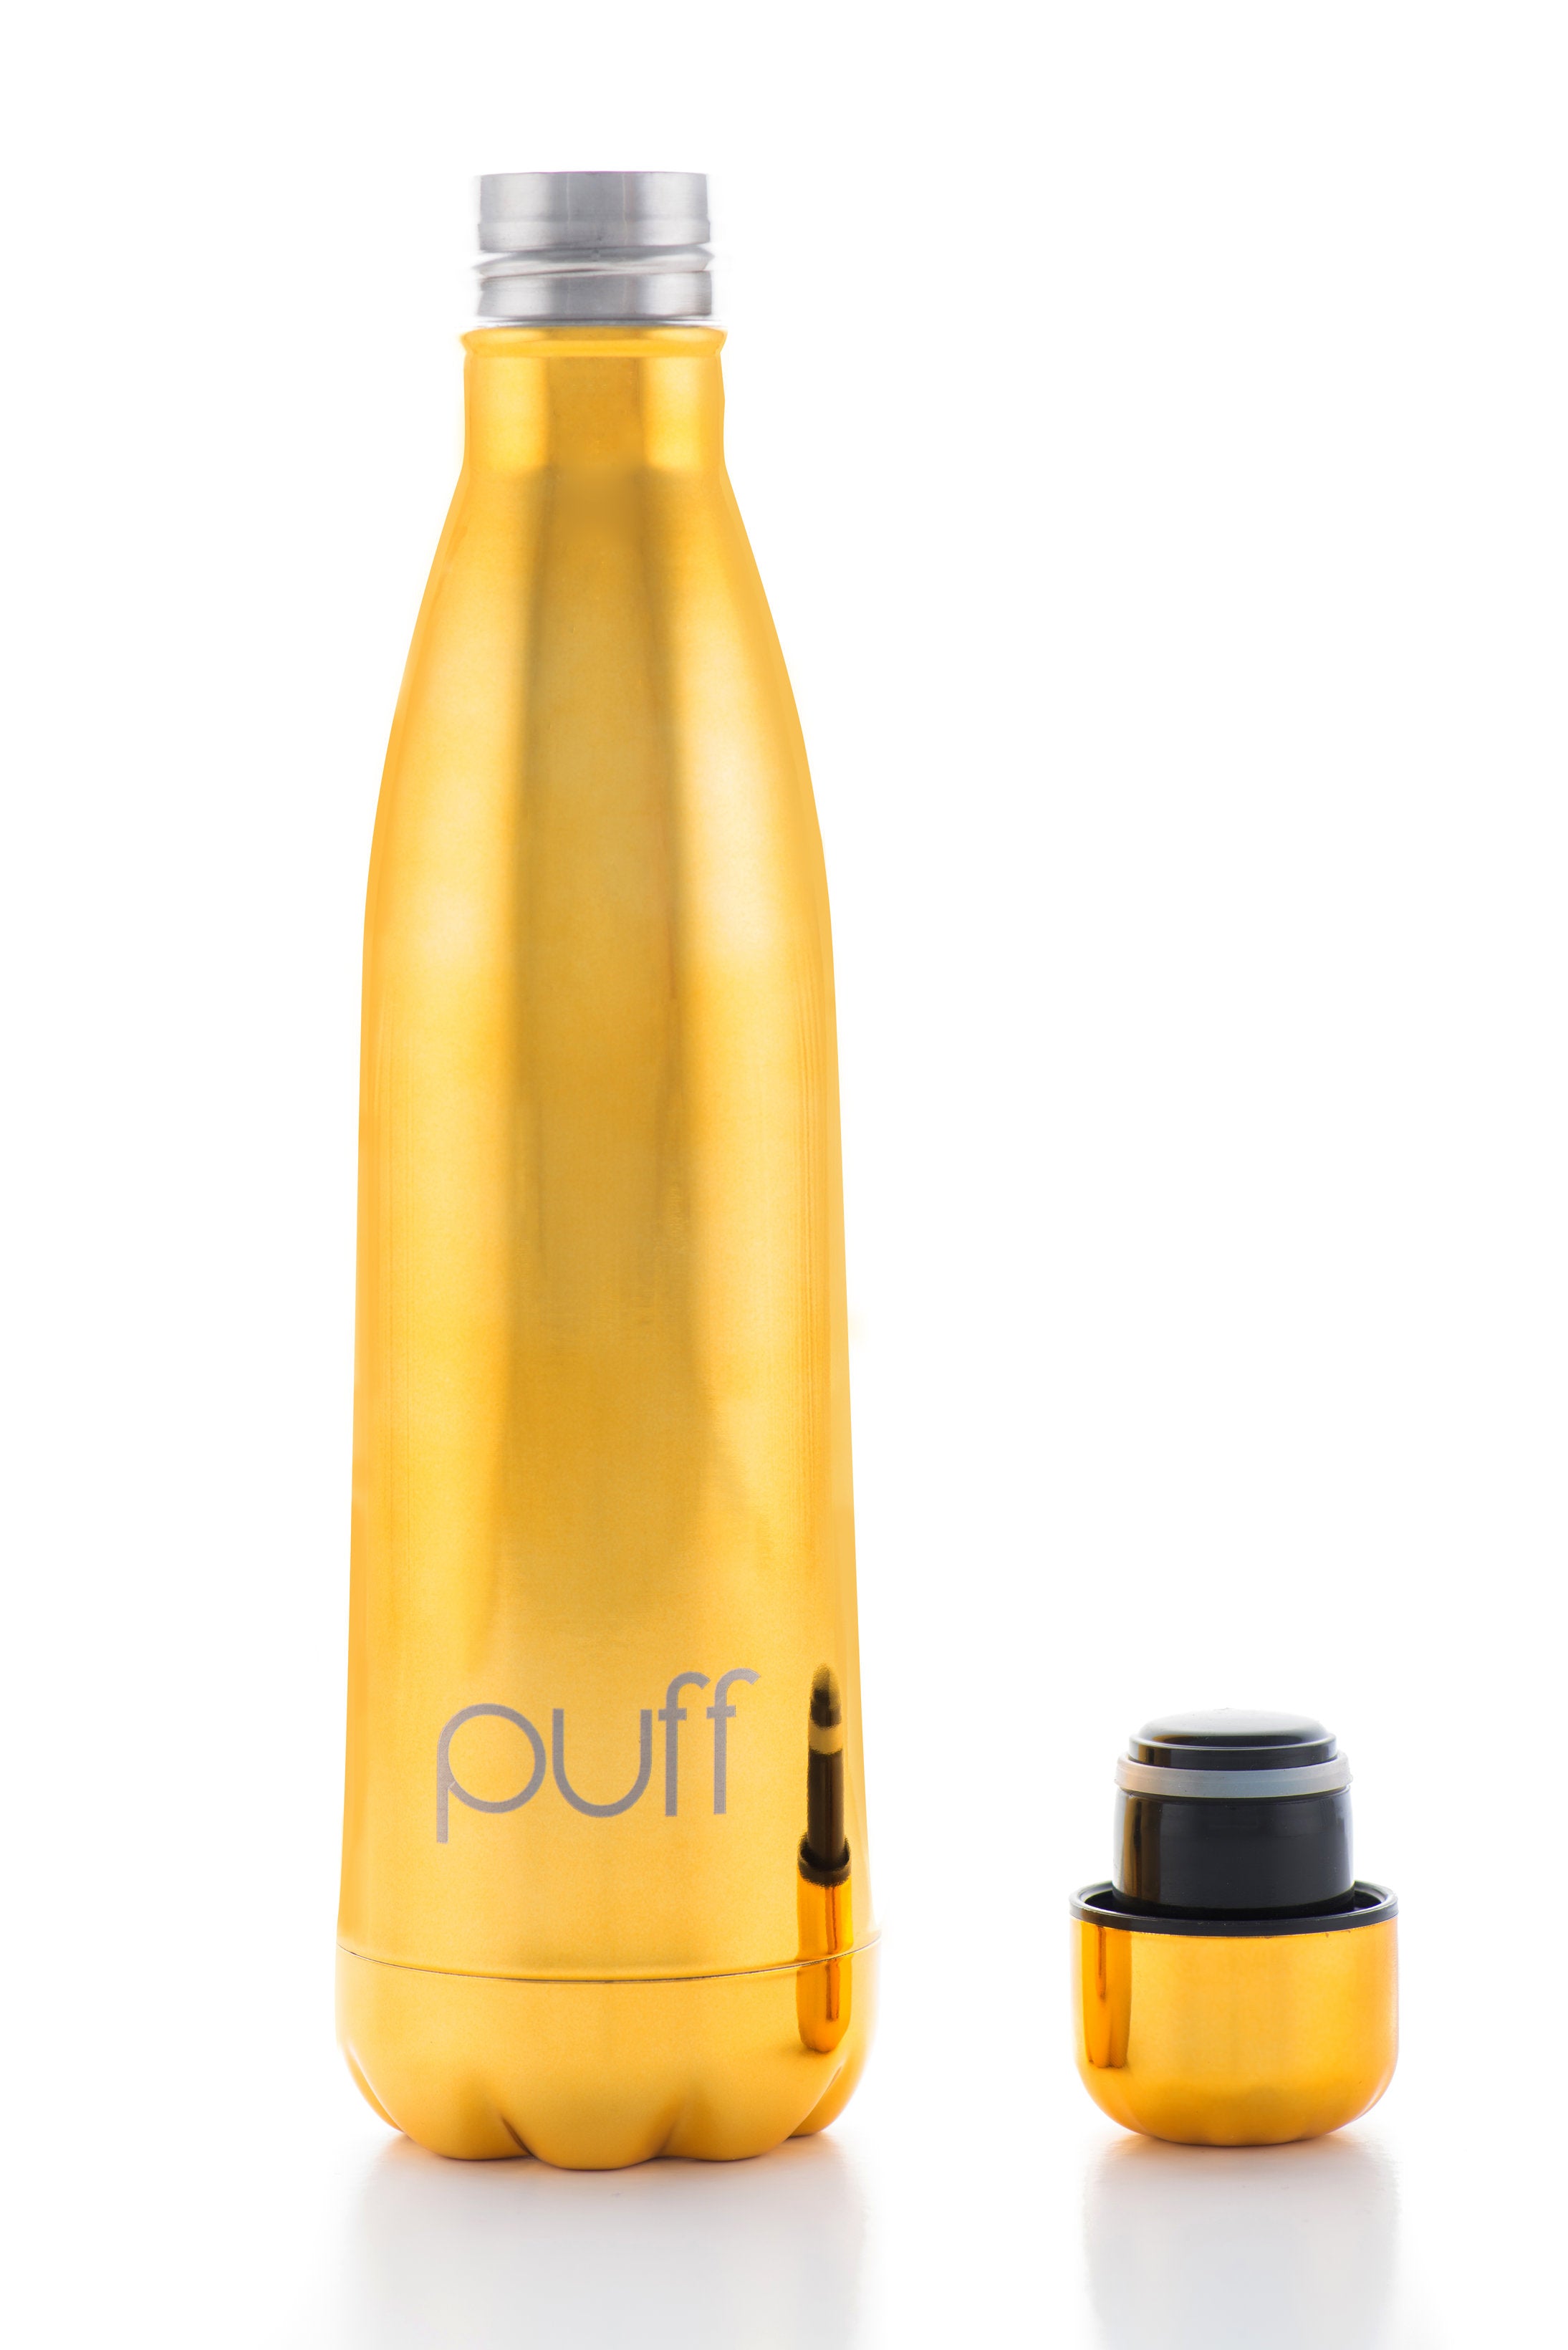 puff | Metallic Gold Stainless Steel Bottle. "500ml"